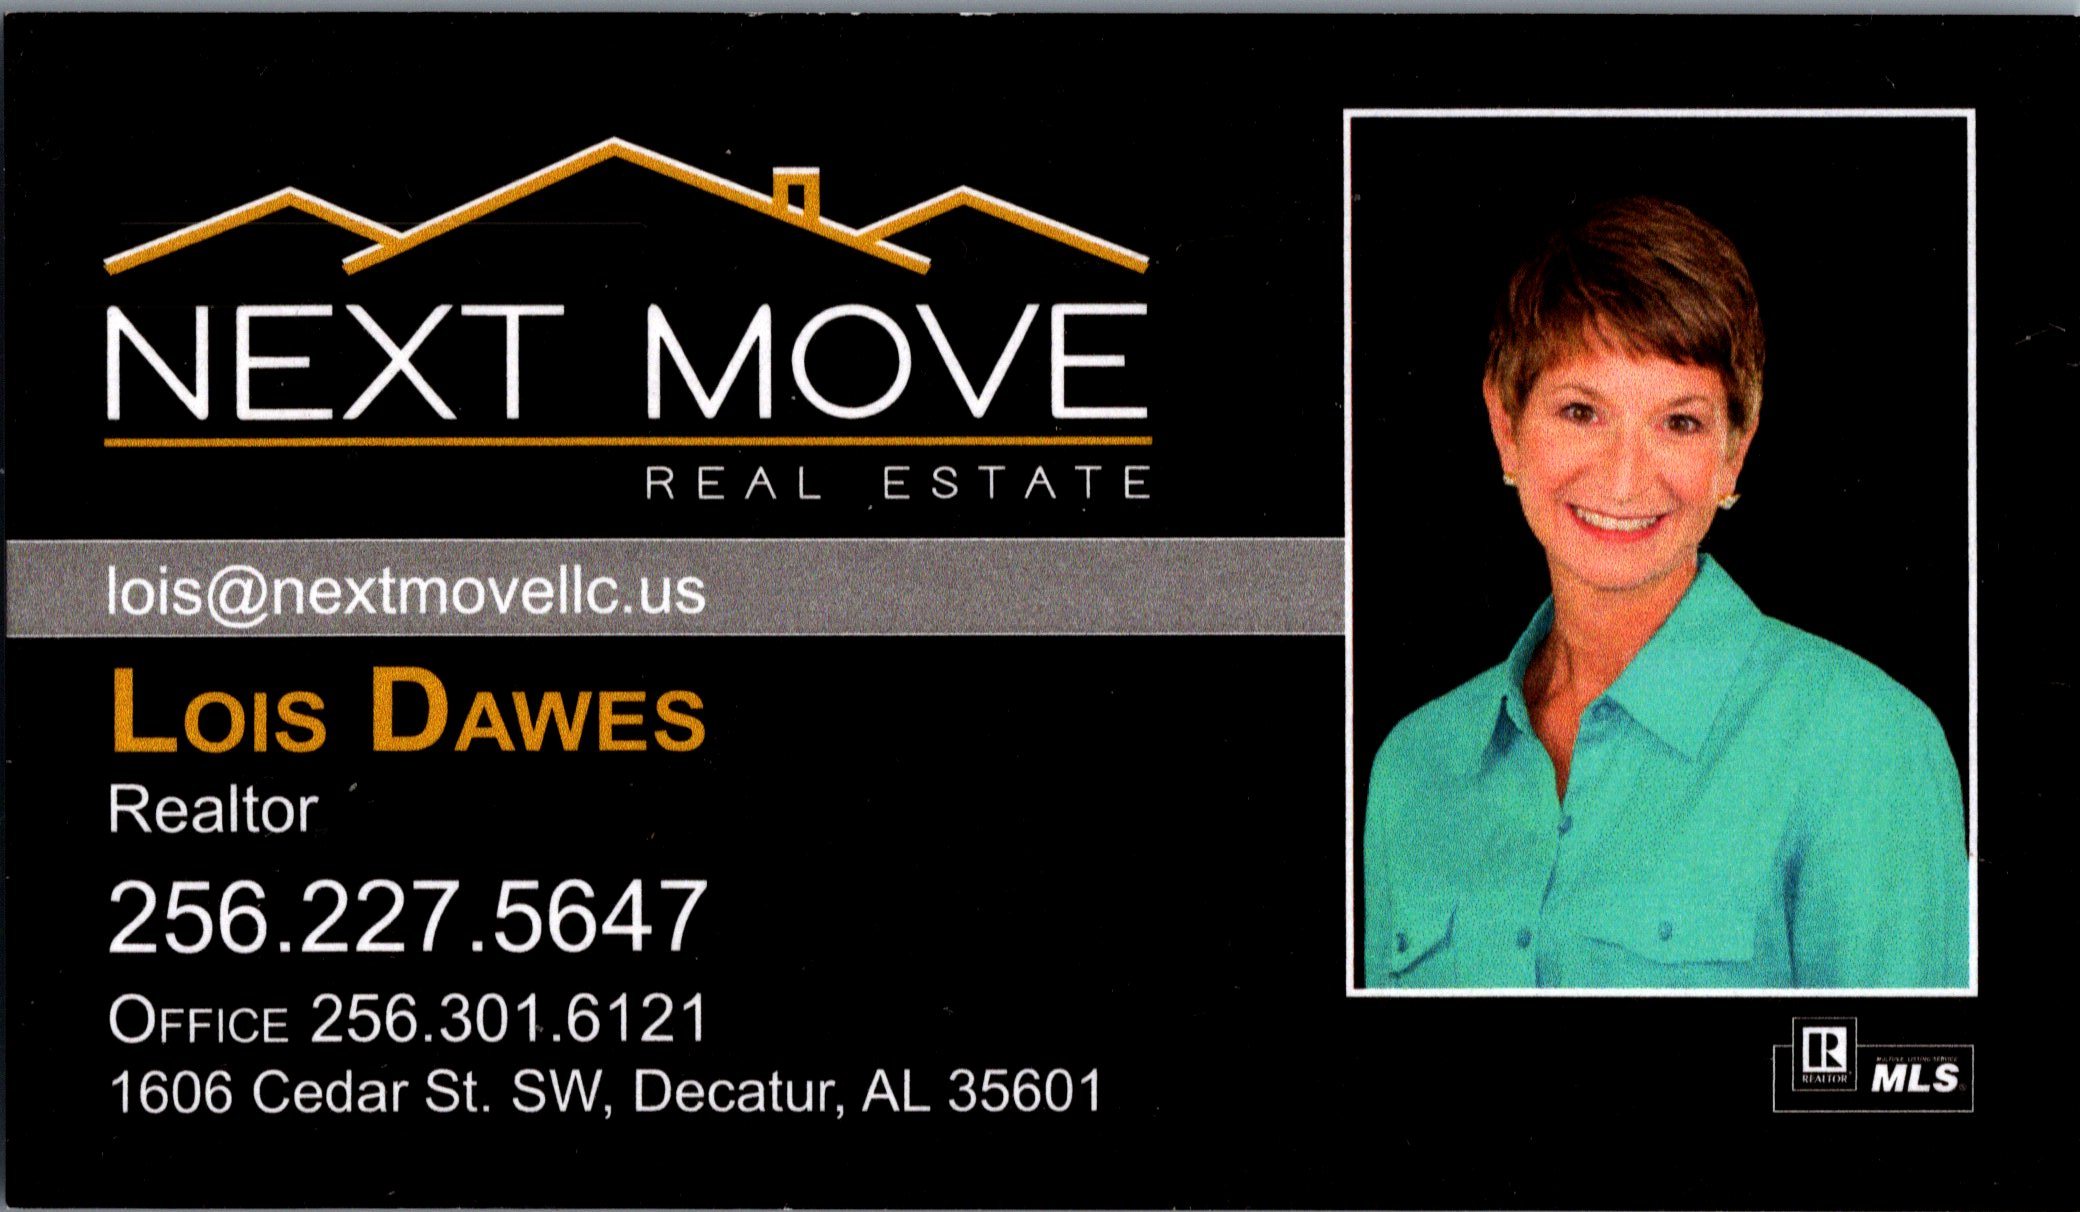 Next Move Real Estate | Lois Dawes